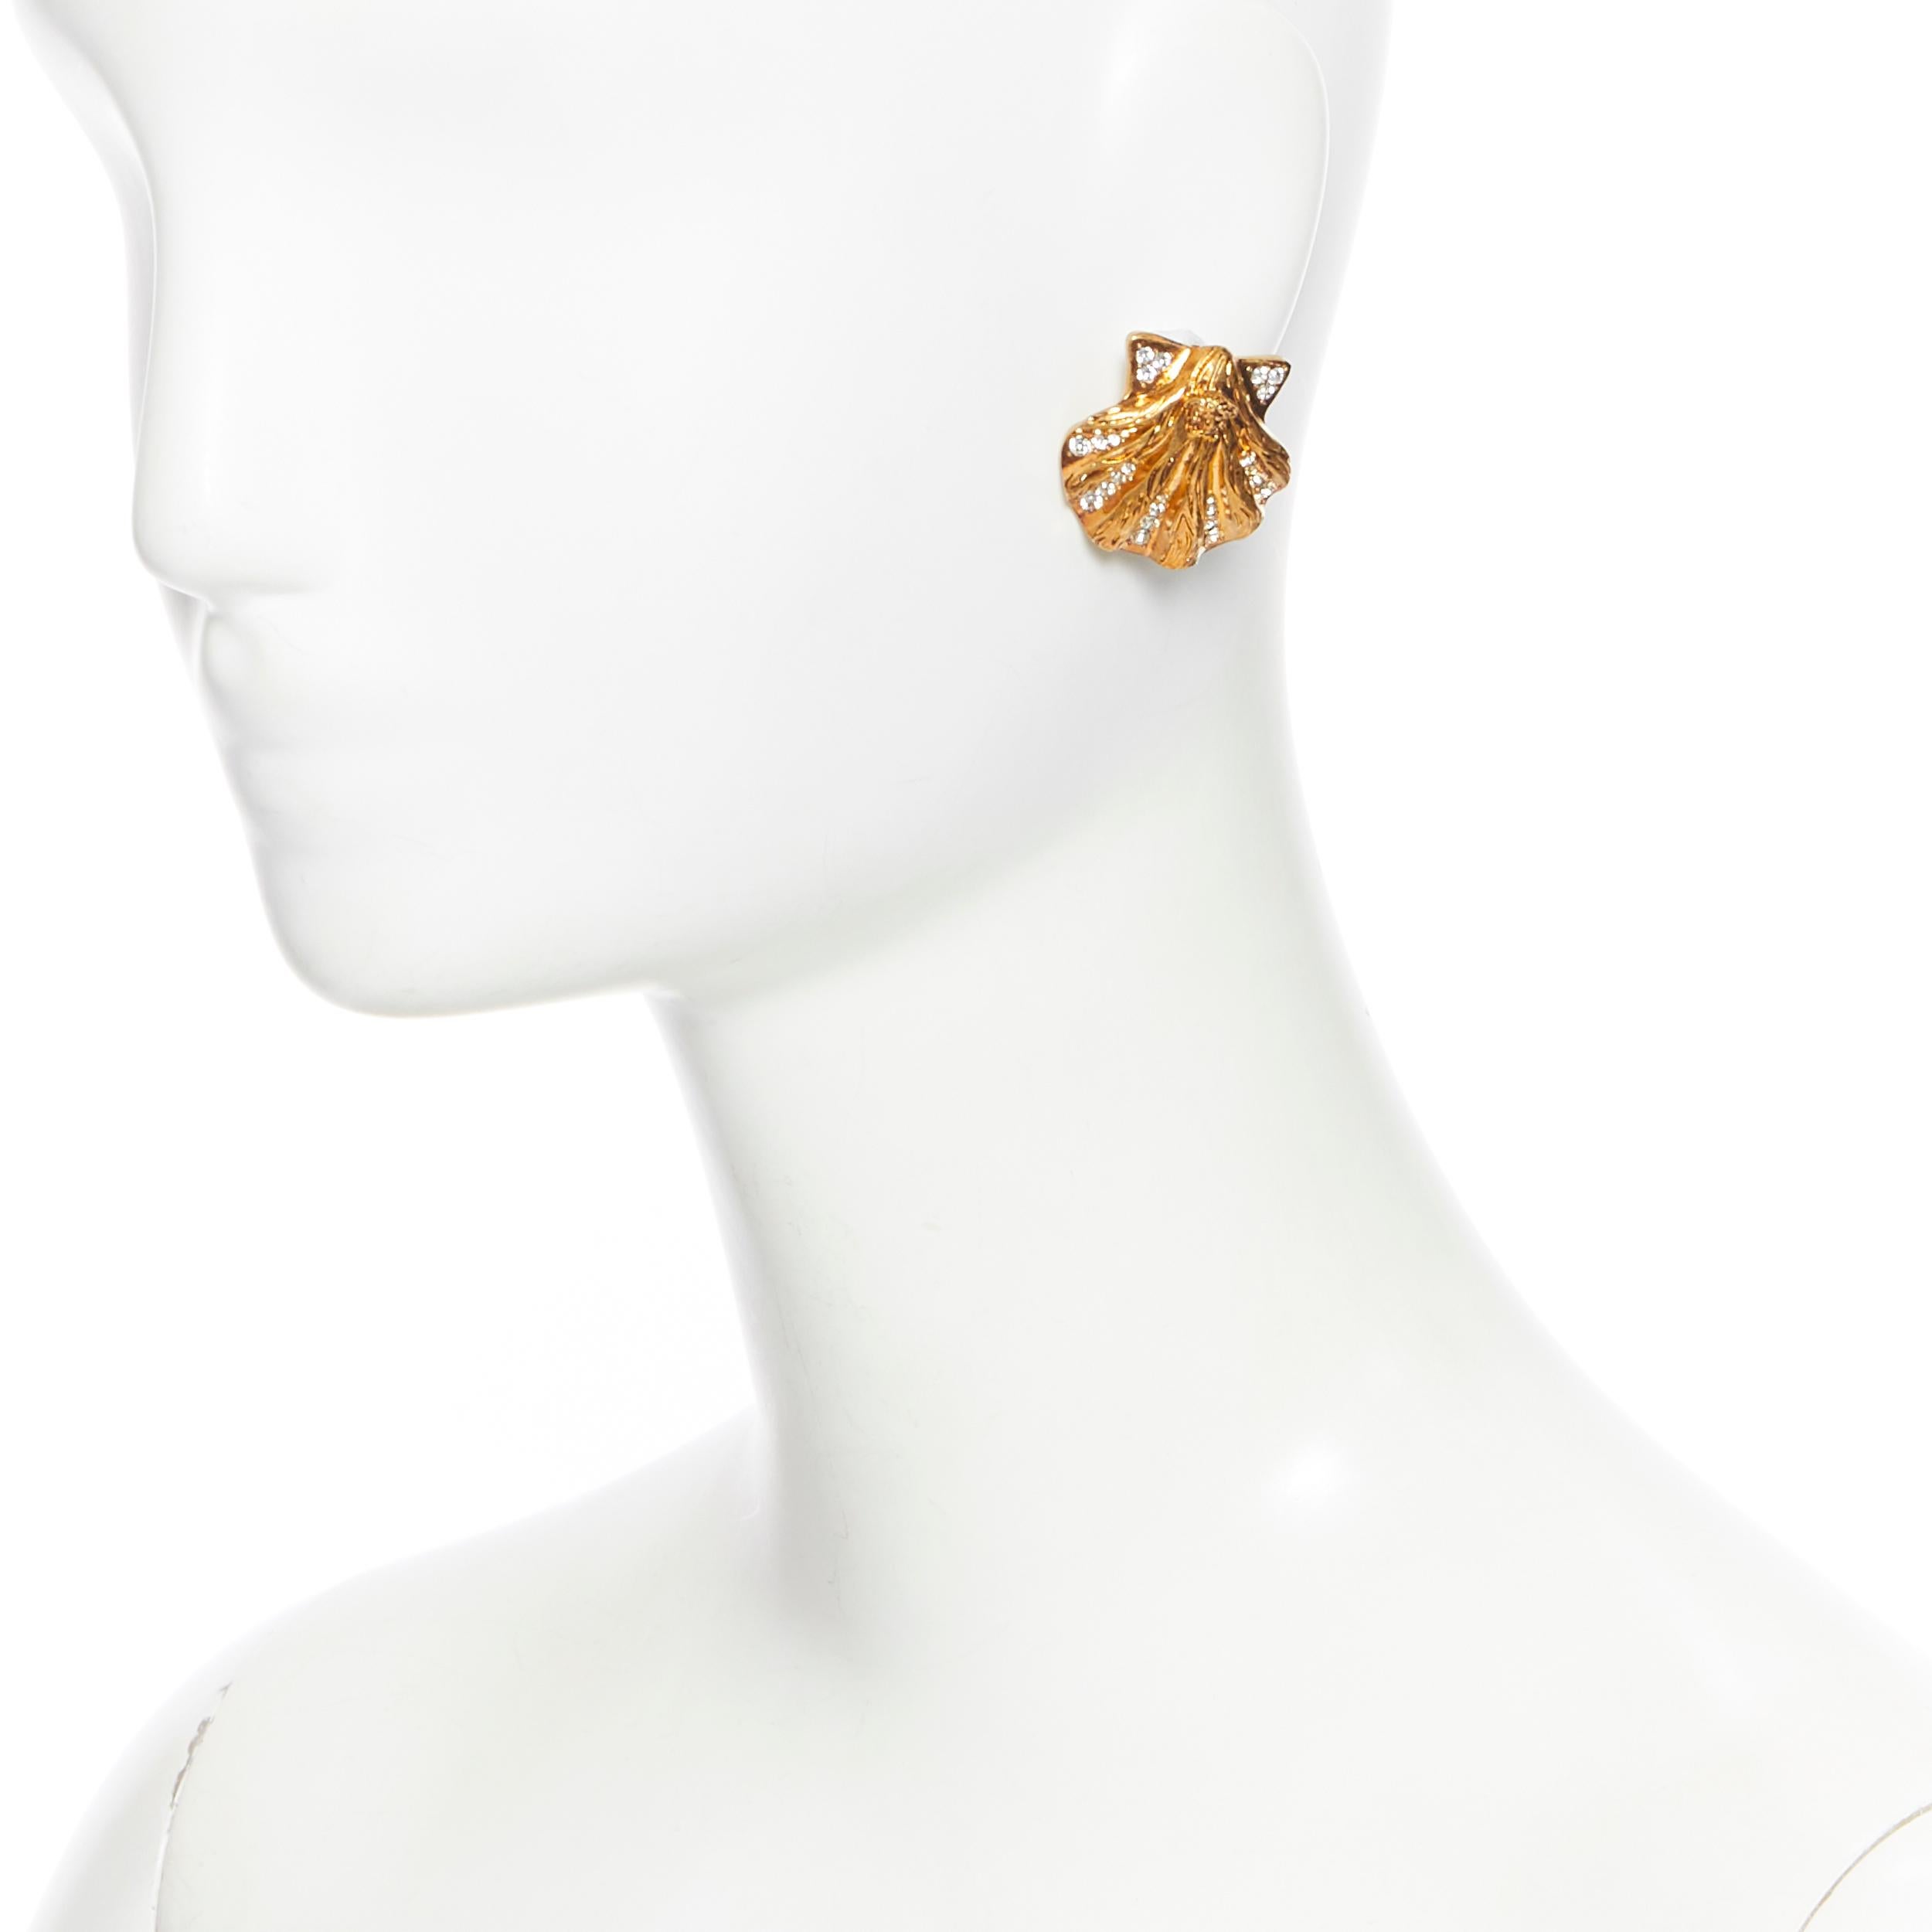 new VERSACE SS18 Tresor De La Mer gold jewel starfish shell crystal earring
Brand: Versace
Designer: Donatella Versace
Collection: Spring Summer 2018
Model Name / Style: Tresor De La Mer earring
Material: Copper, nickel
Color: Gold
Pattern: